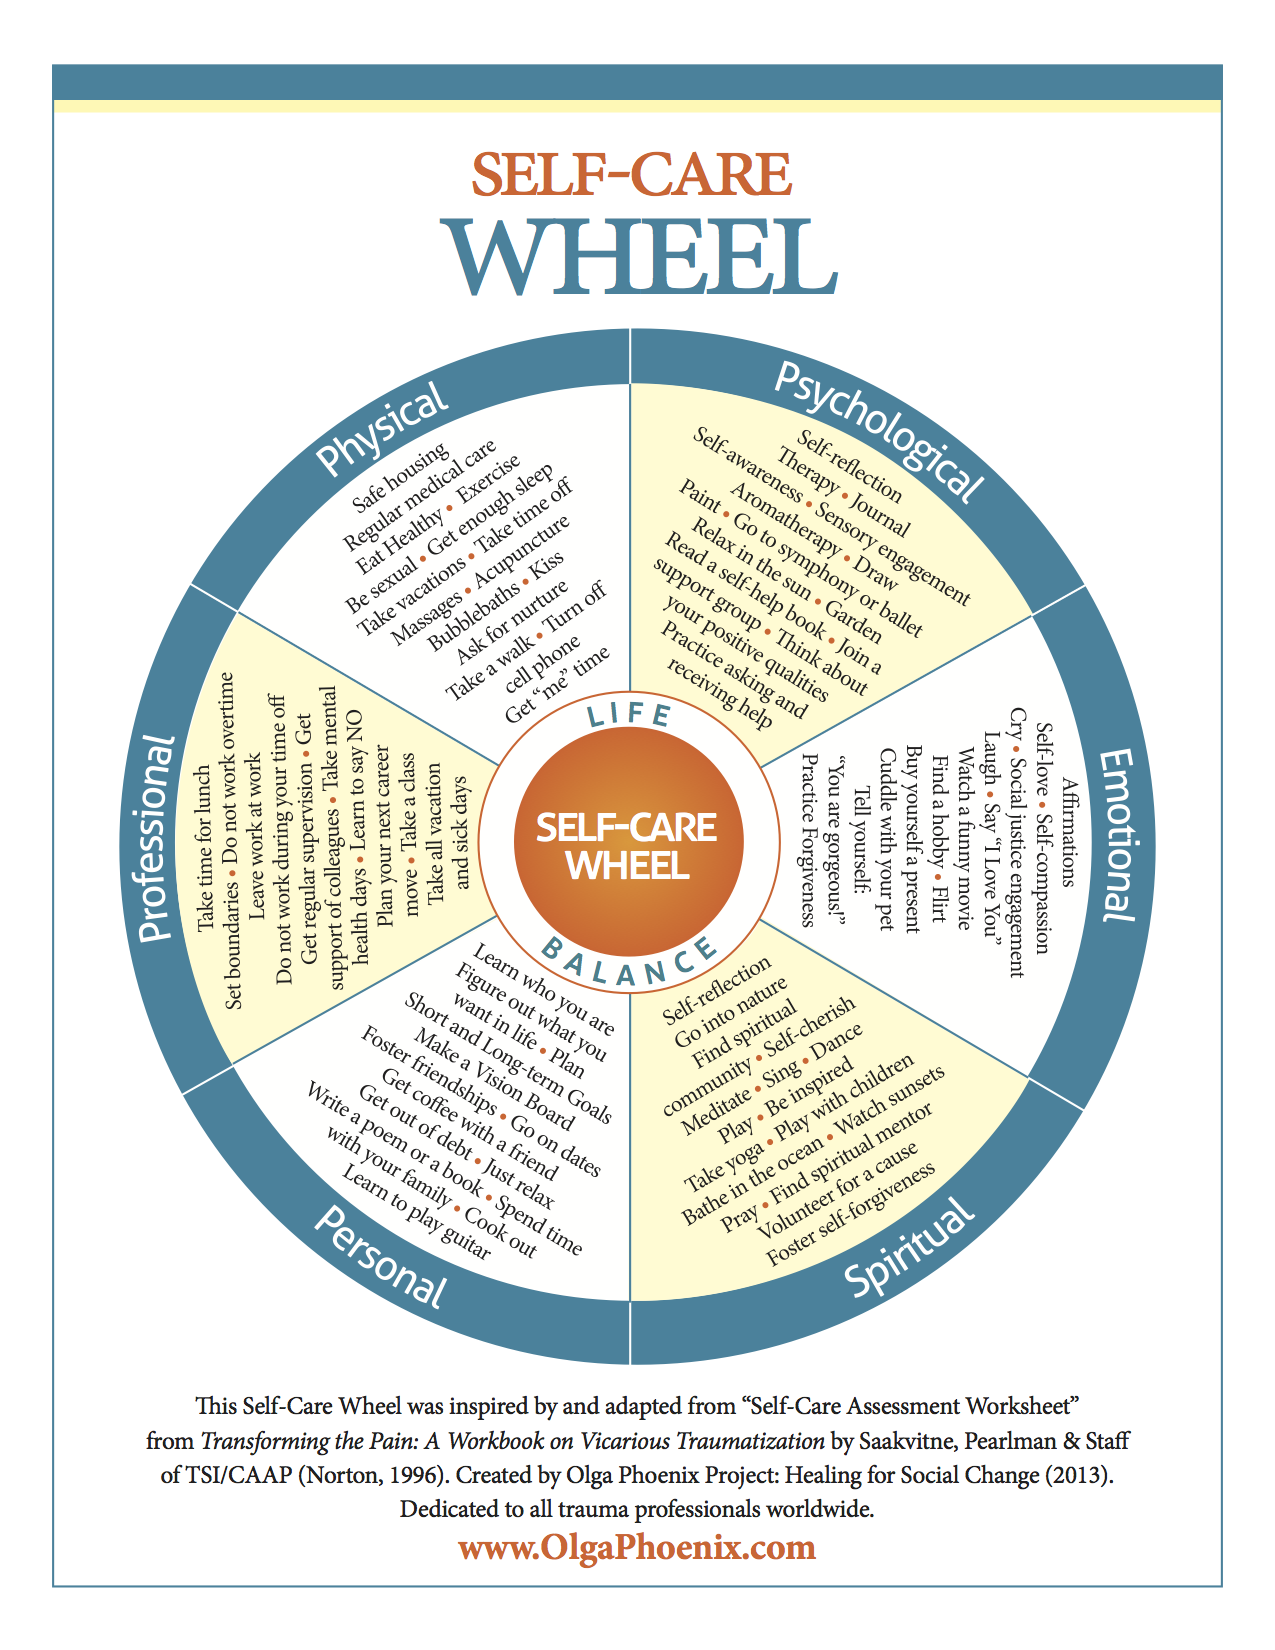 Self-care wheel image